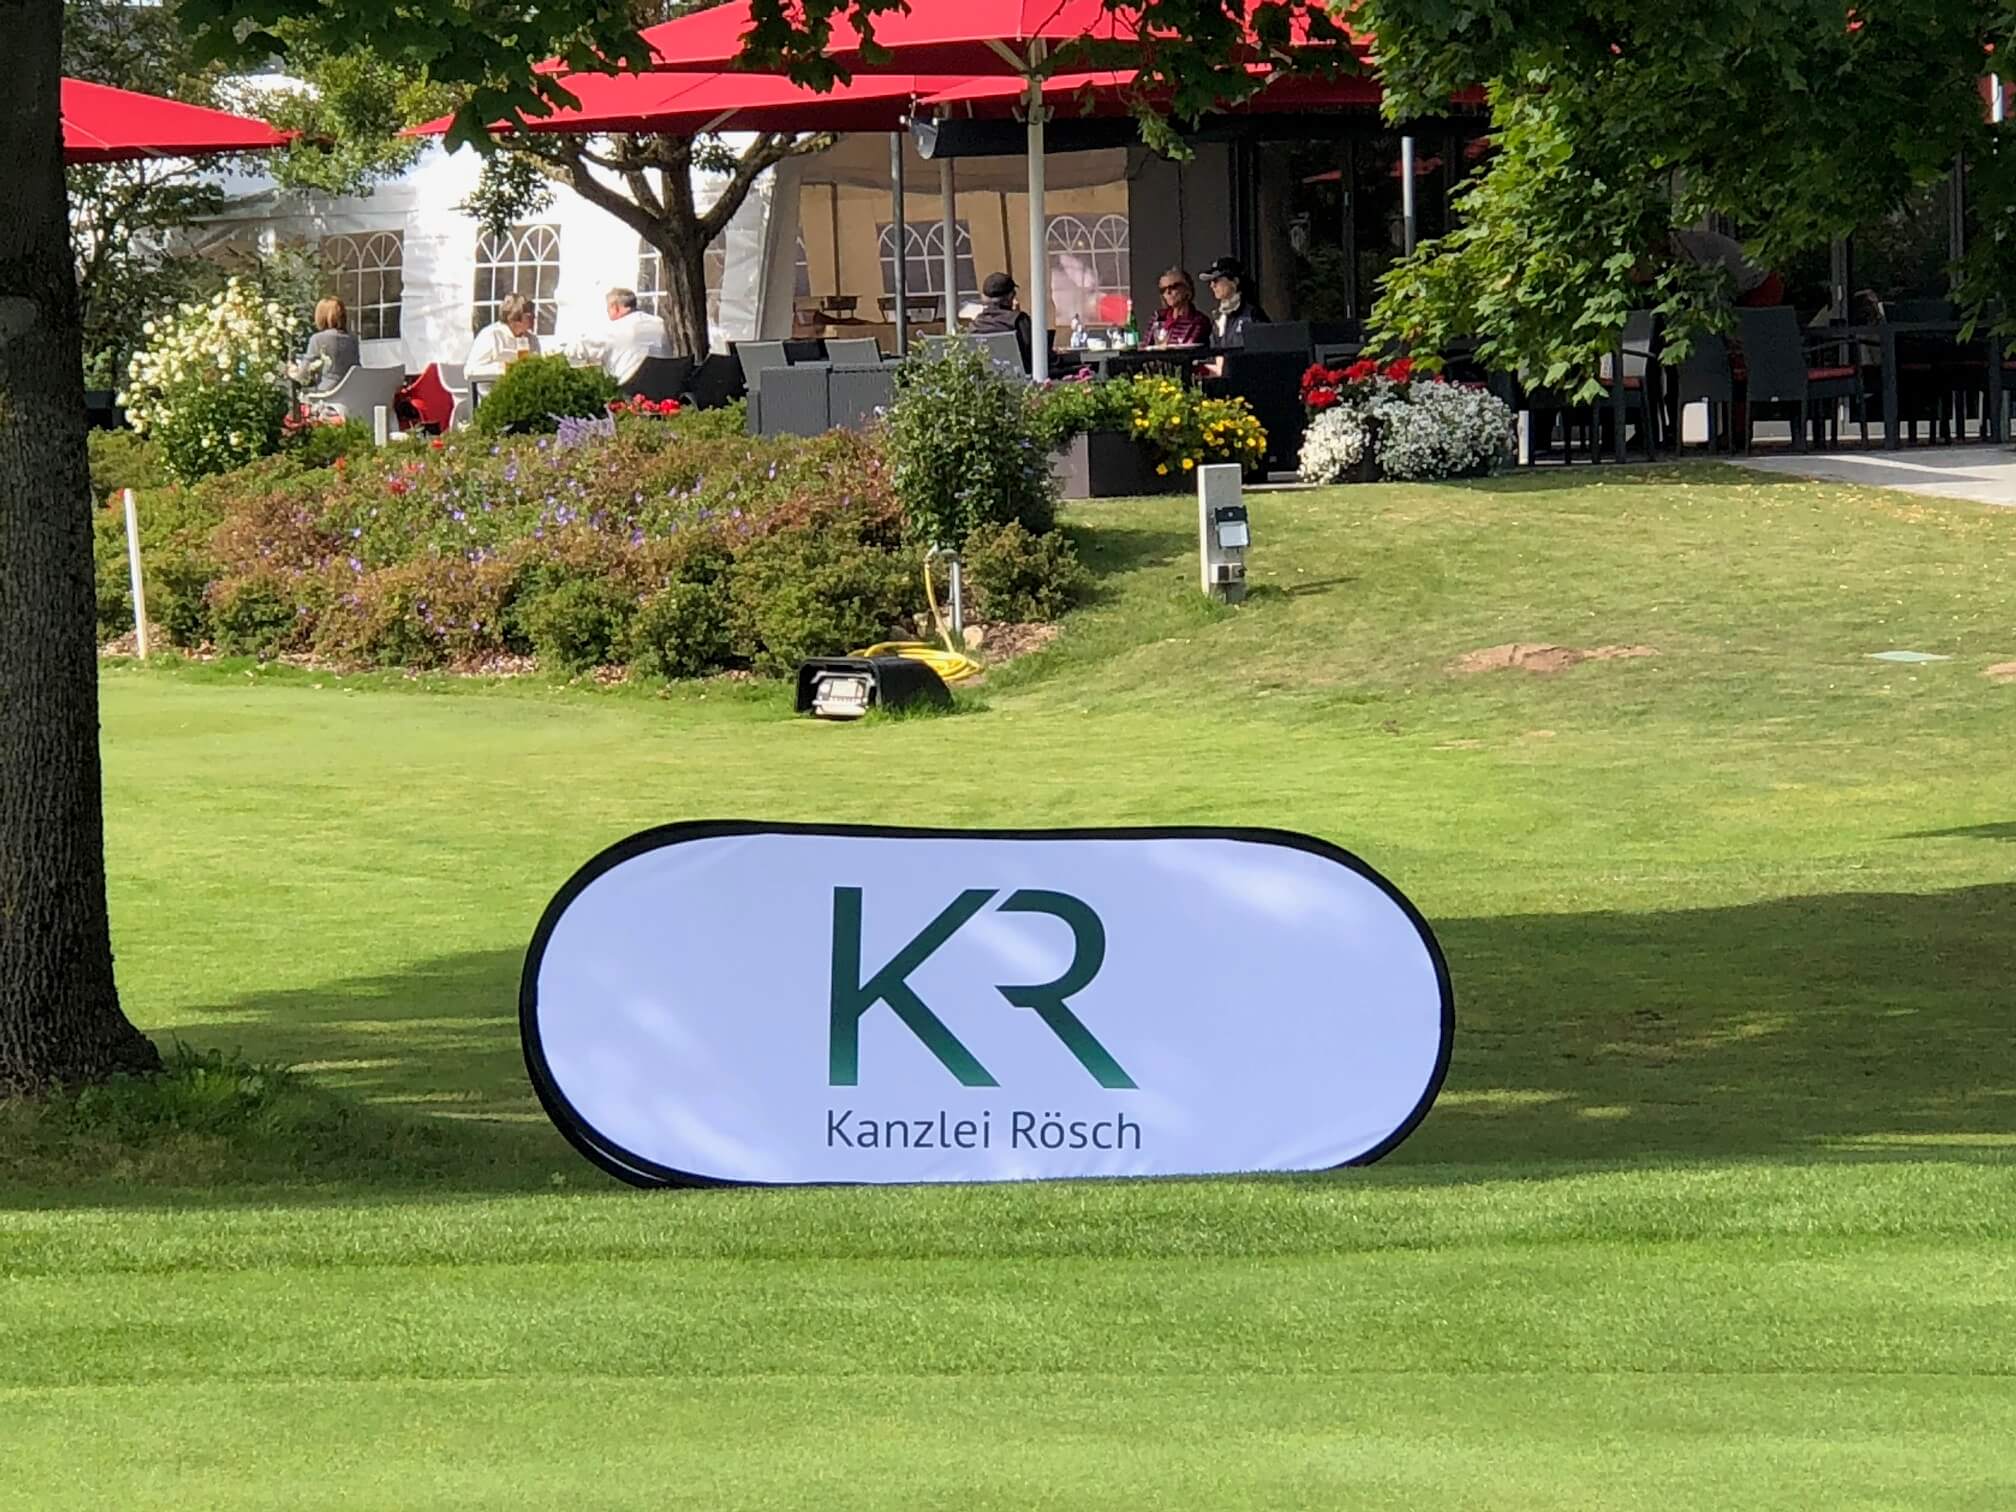 Kanzlei Rösch als Sponsor der Raiba Golf-Trophy